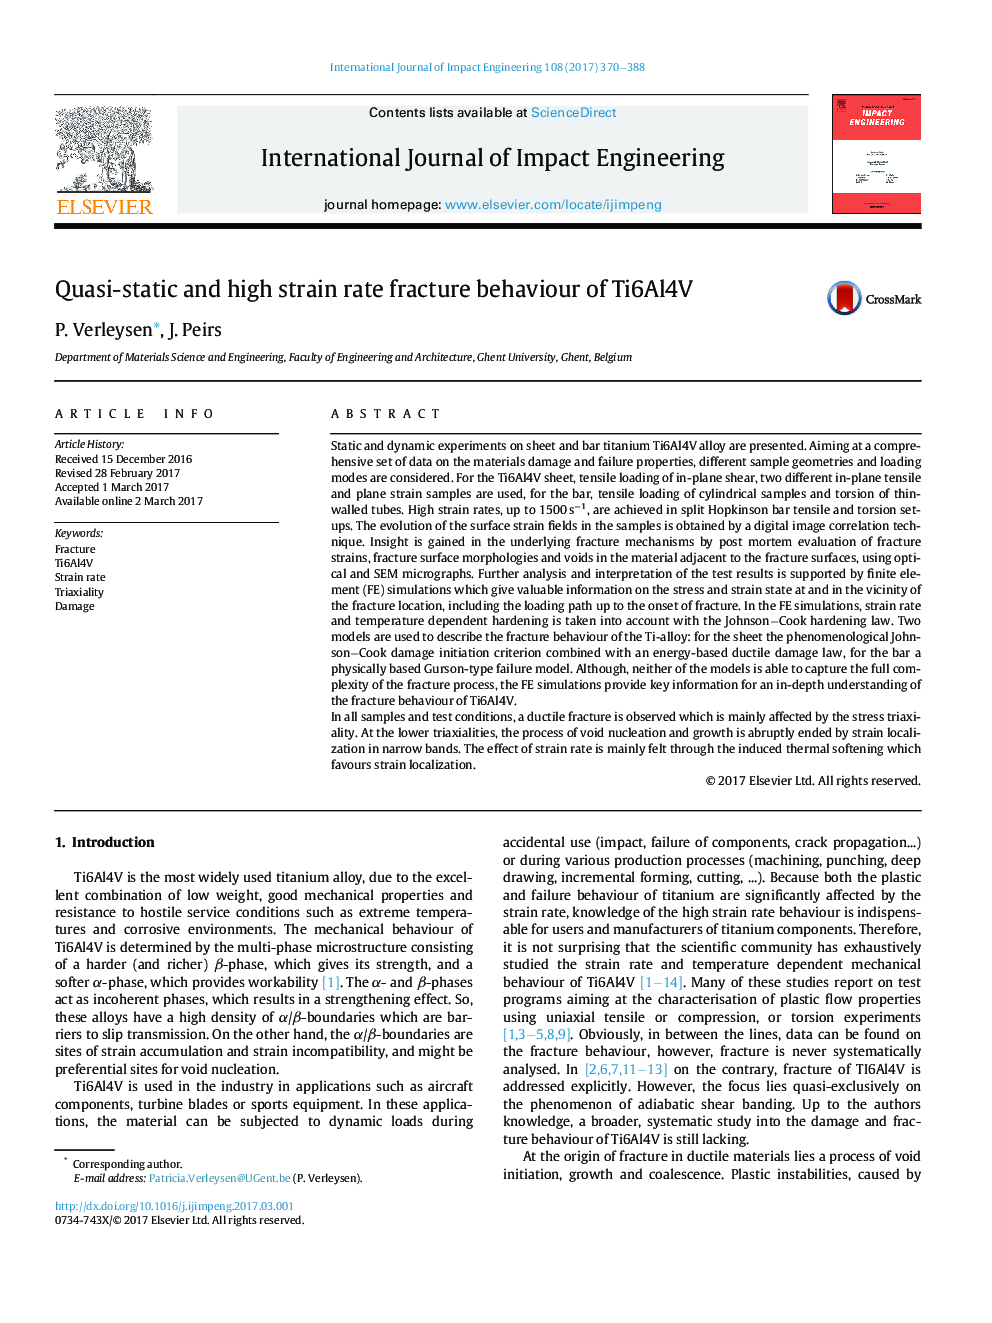 Quasi-static and high strain rate fracture behaviour of Ti6Al4V